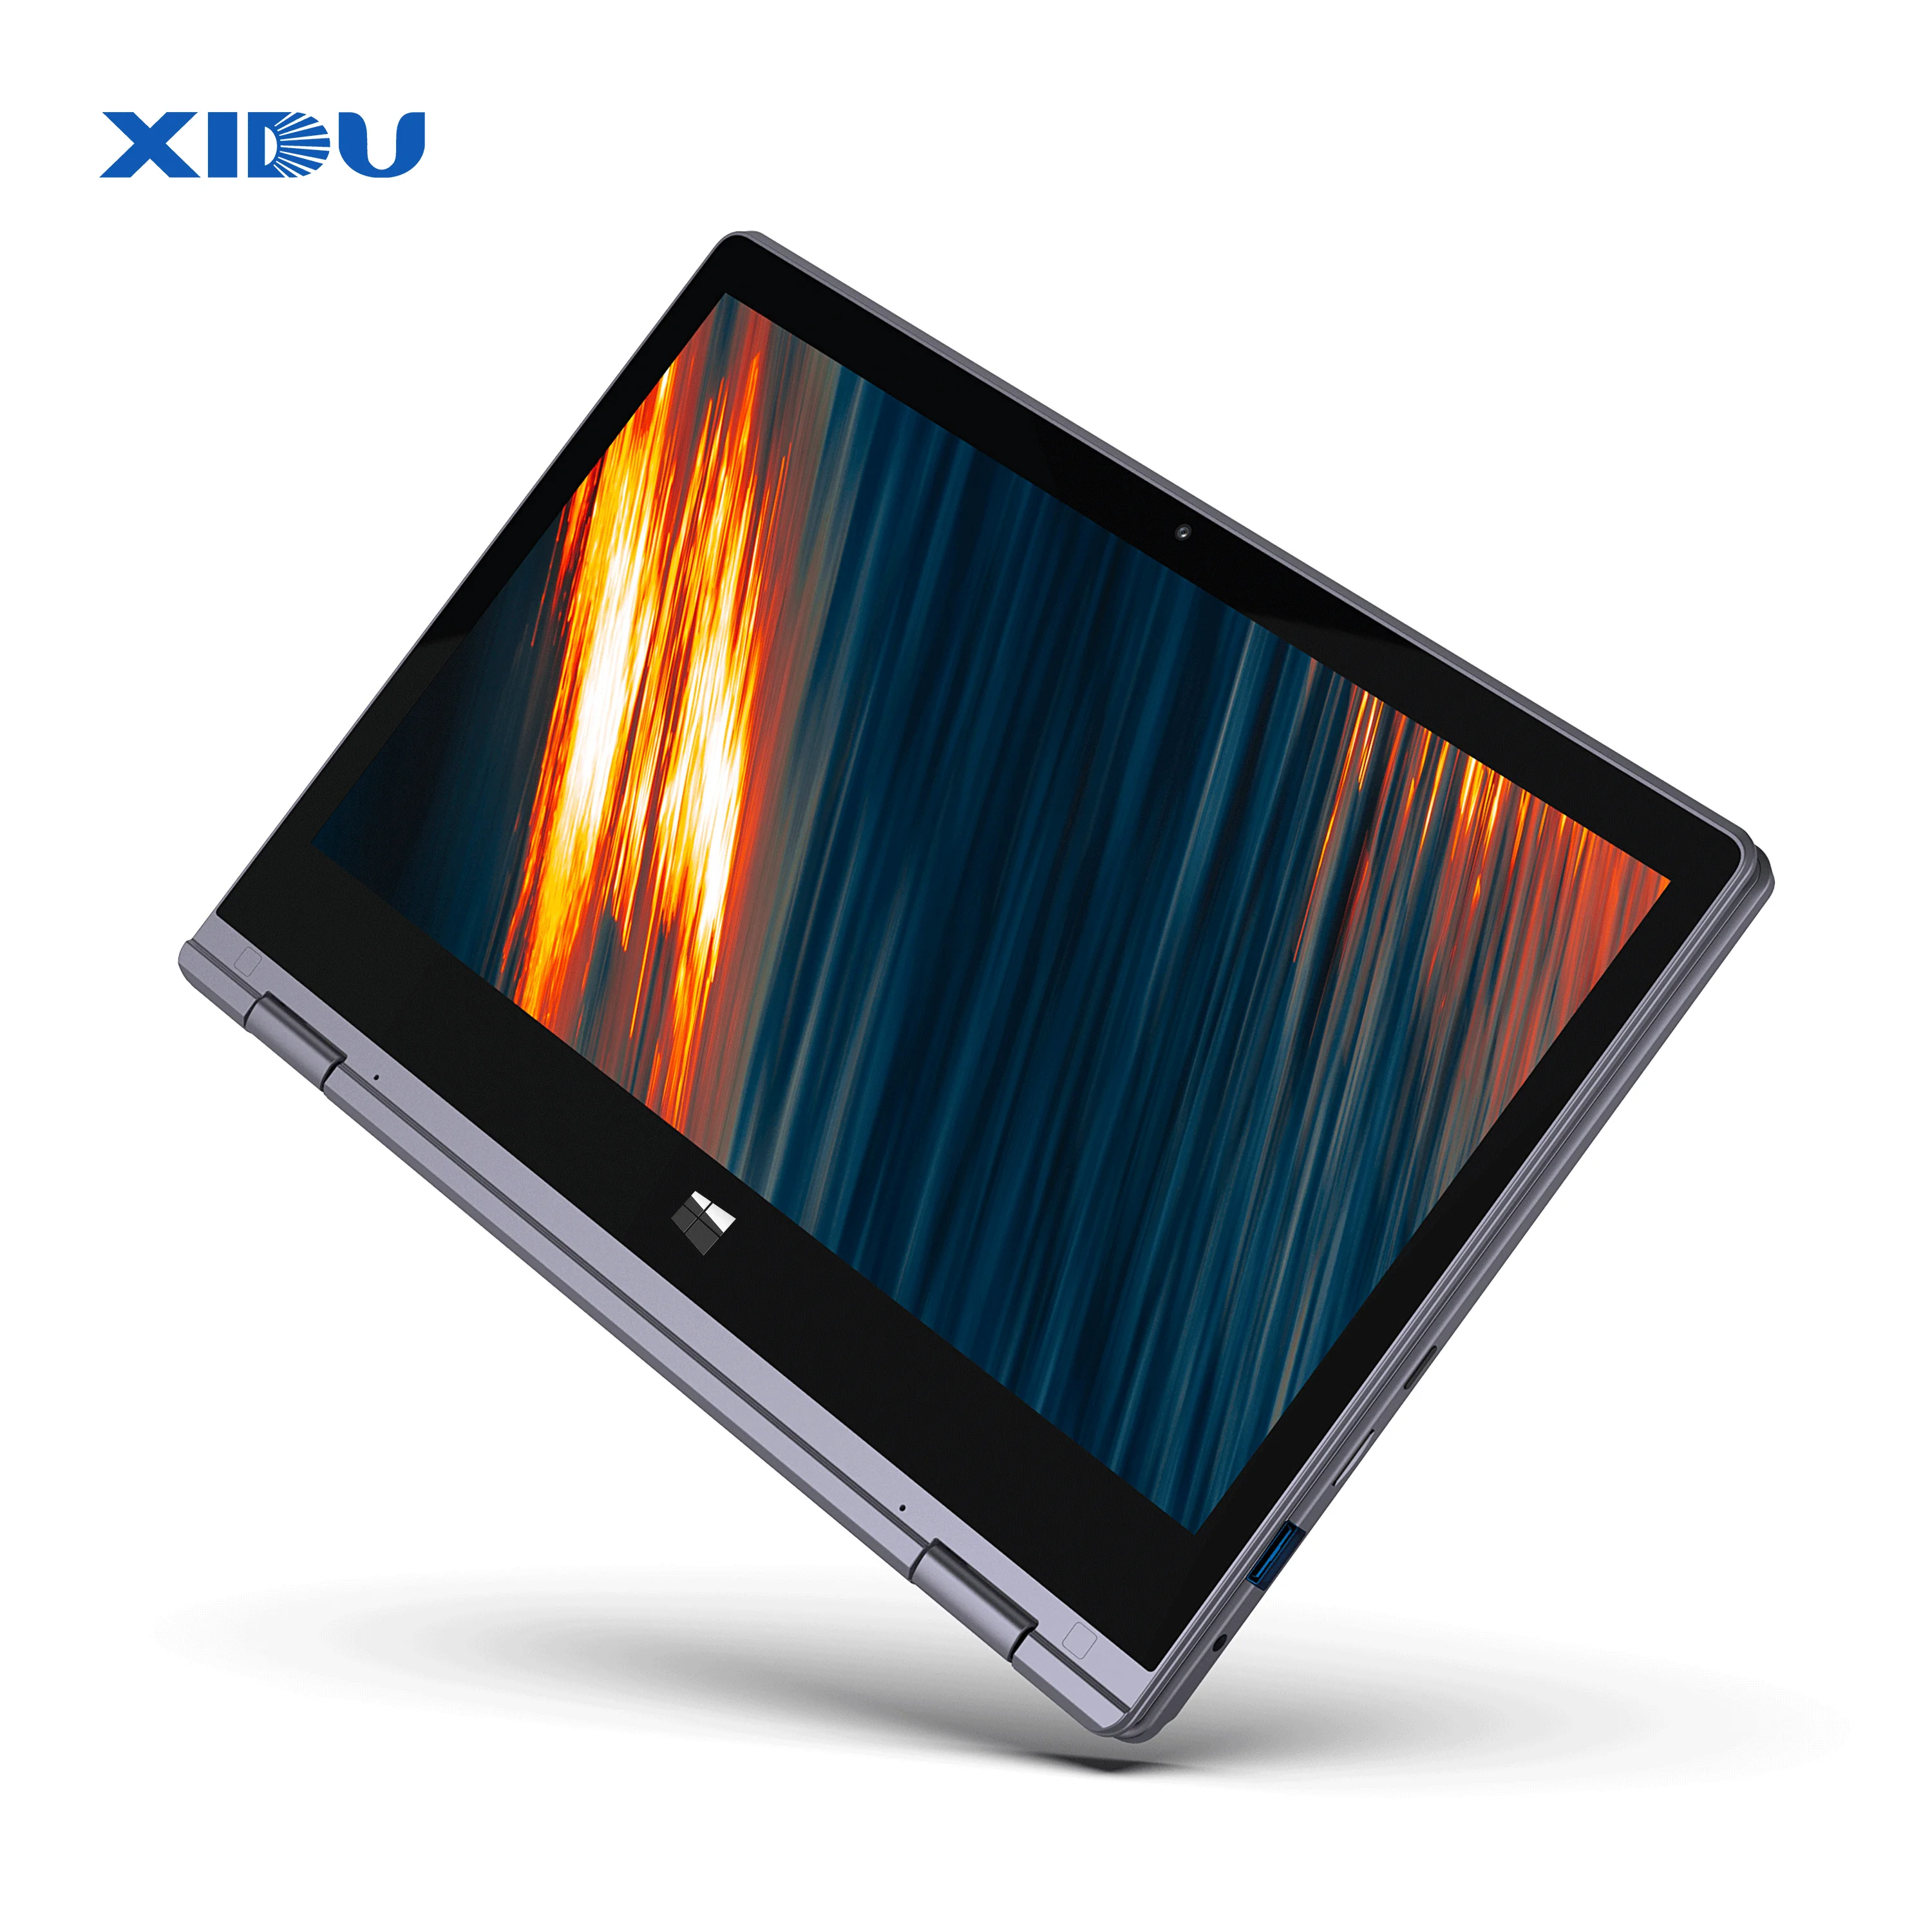 

XIDU 11.6 Inch Intel Celeron J3355 6G+128G SSD 360 Degree Flip Mini Netbooks Laptop Computer, Silver, black, and customize